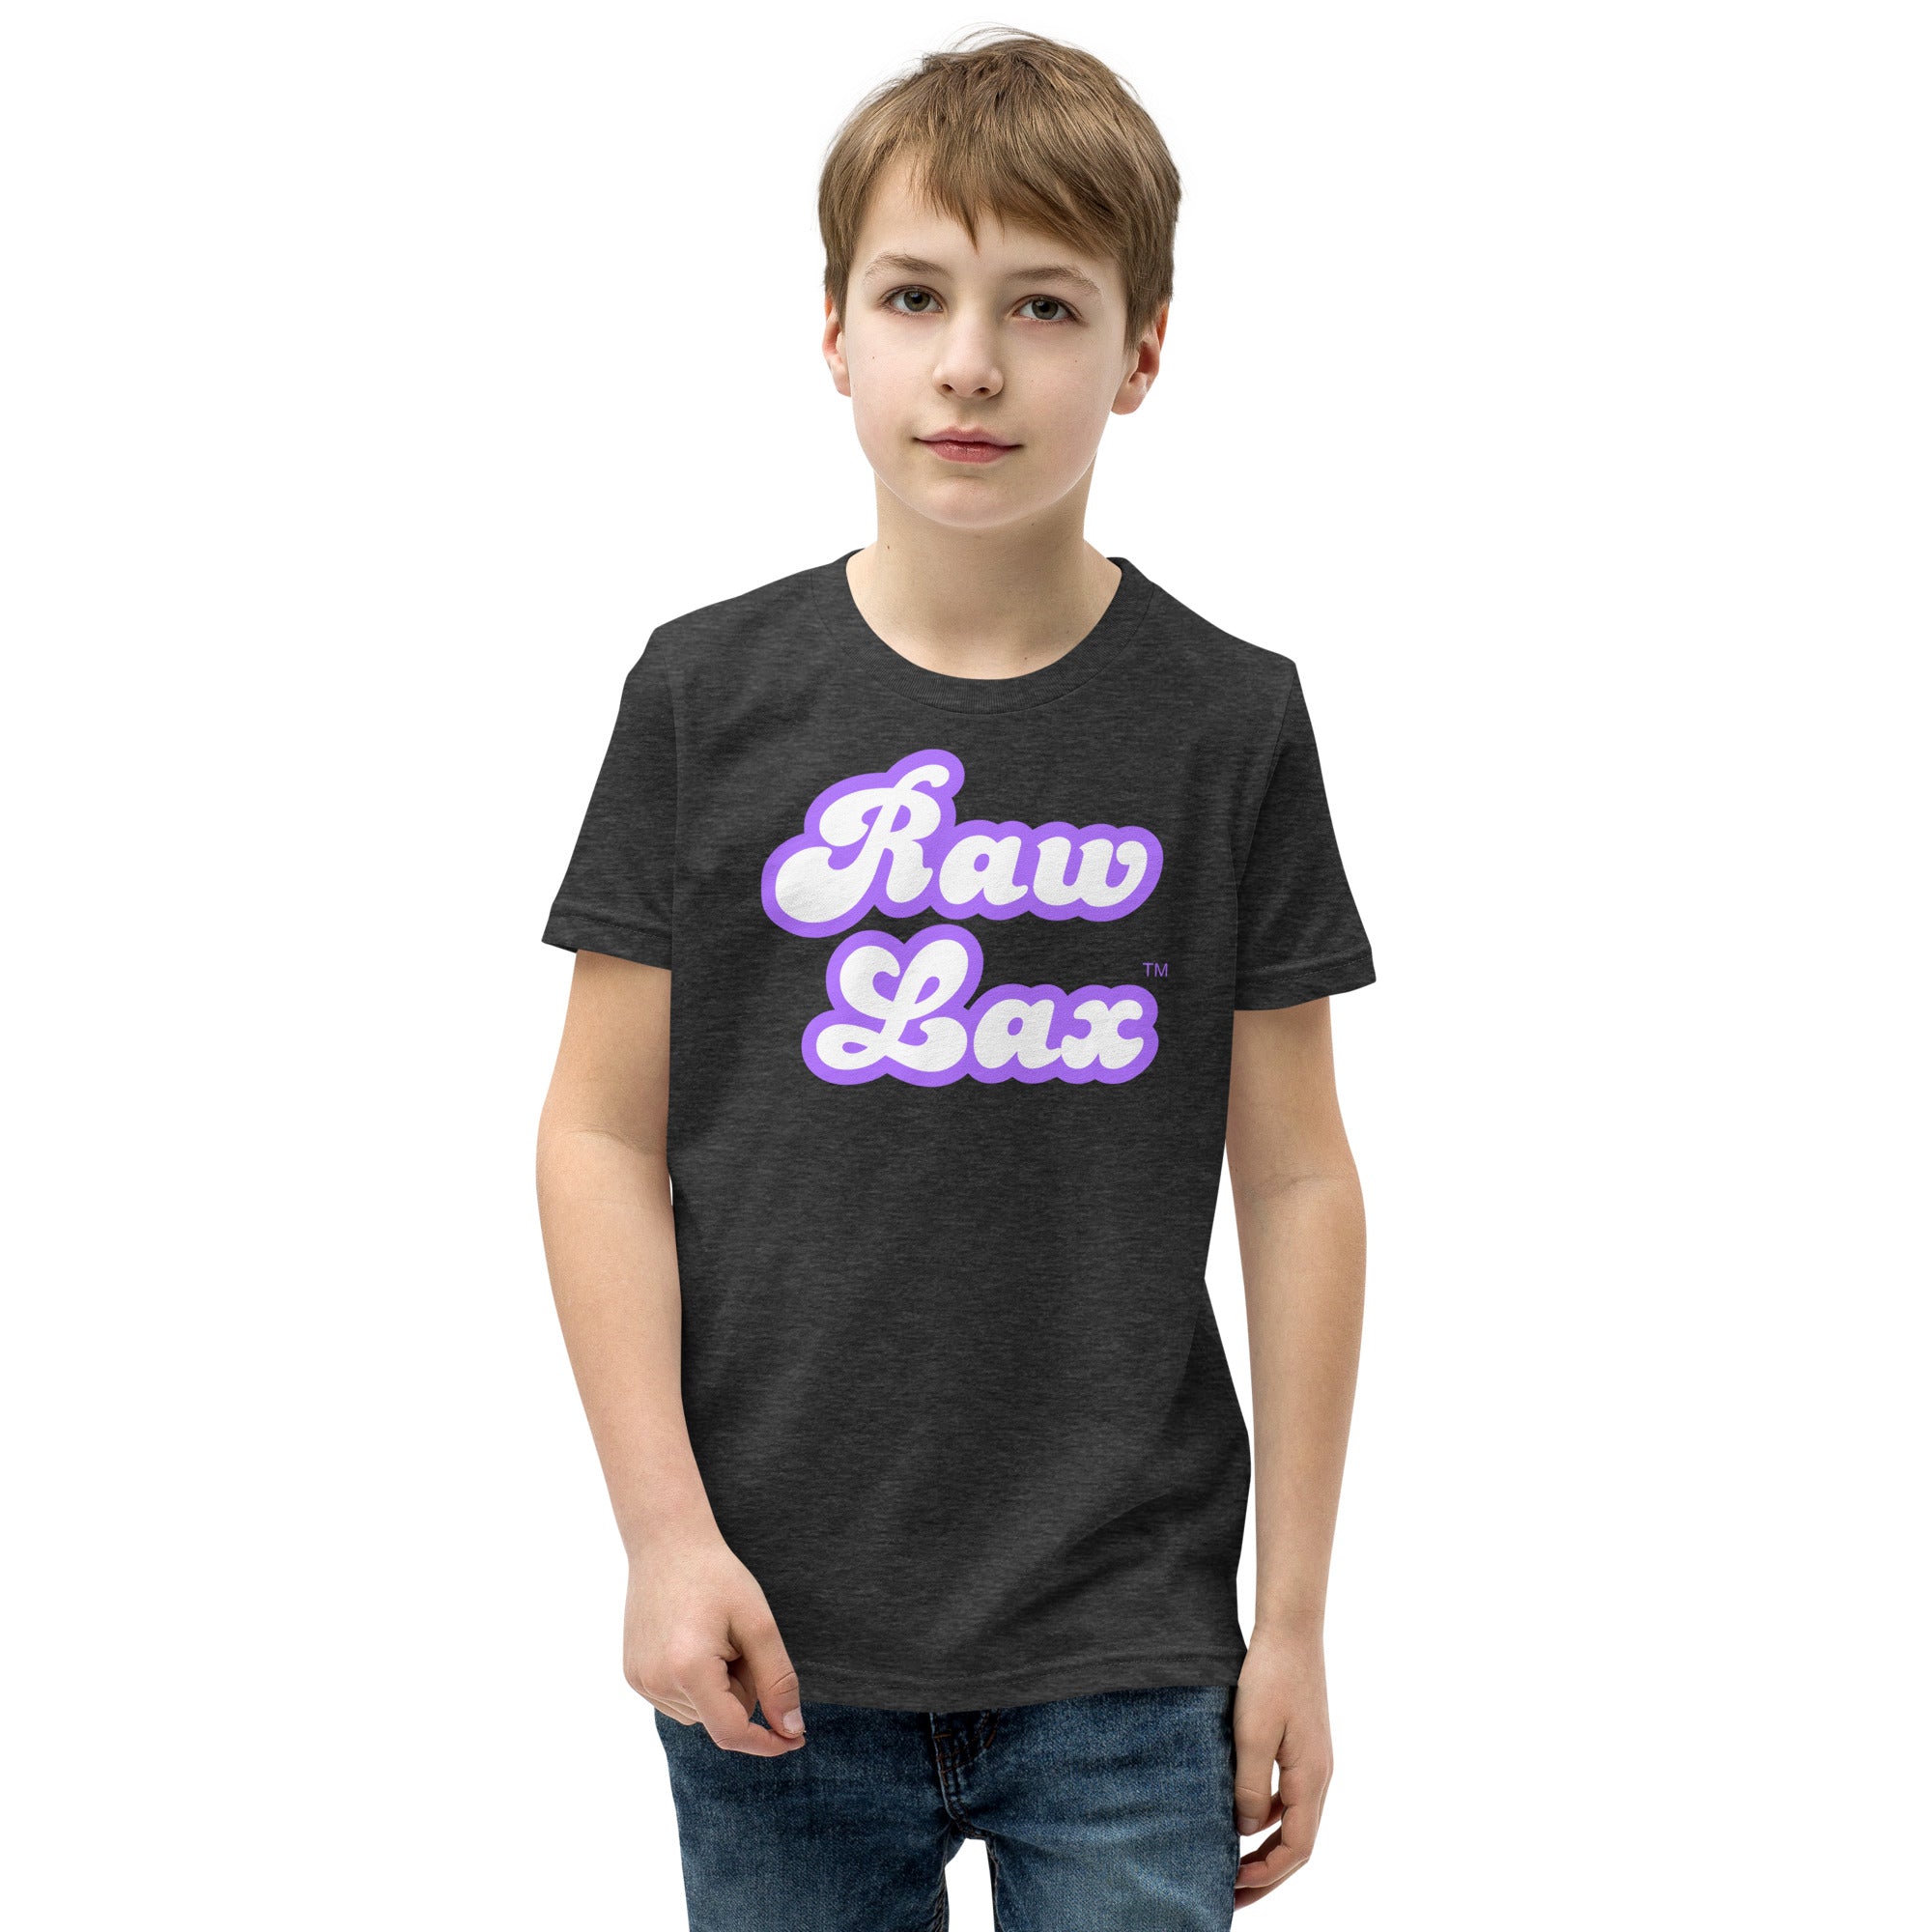 Raw Lax Youth Short Sleeve T-Shirt